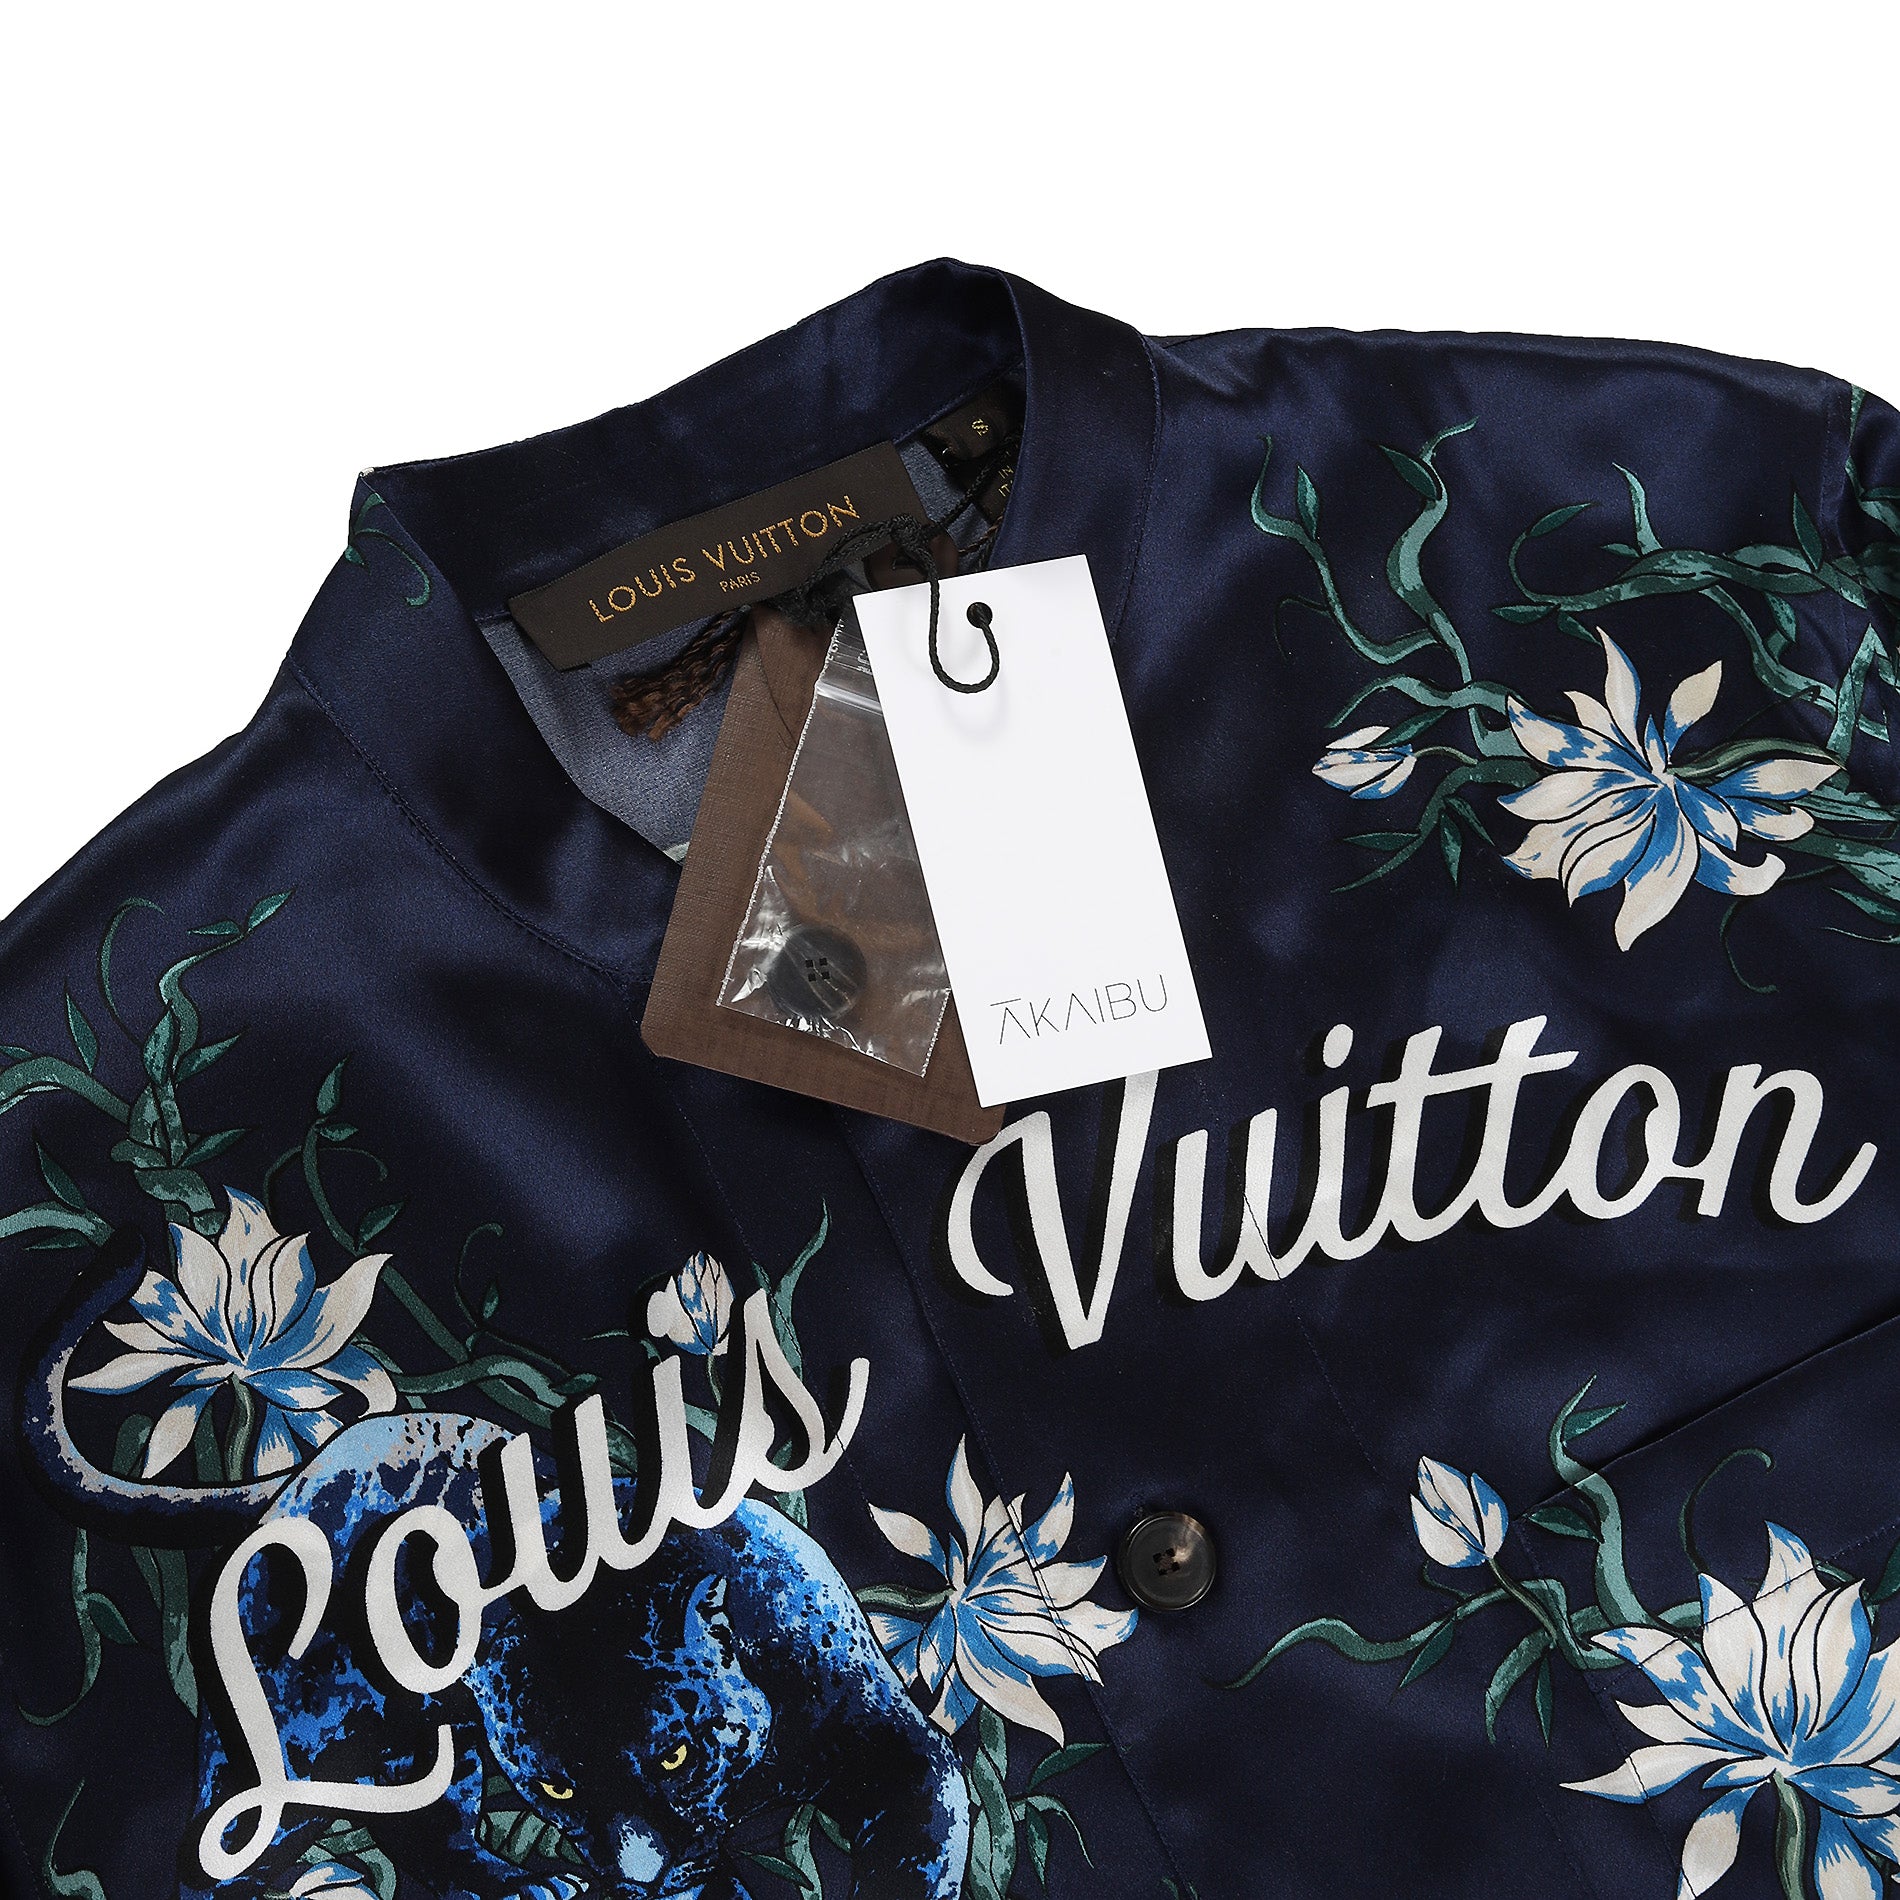 Louis Vuitton polo shirt Details